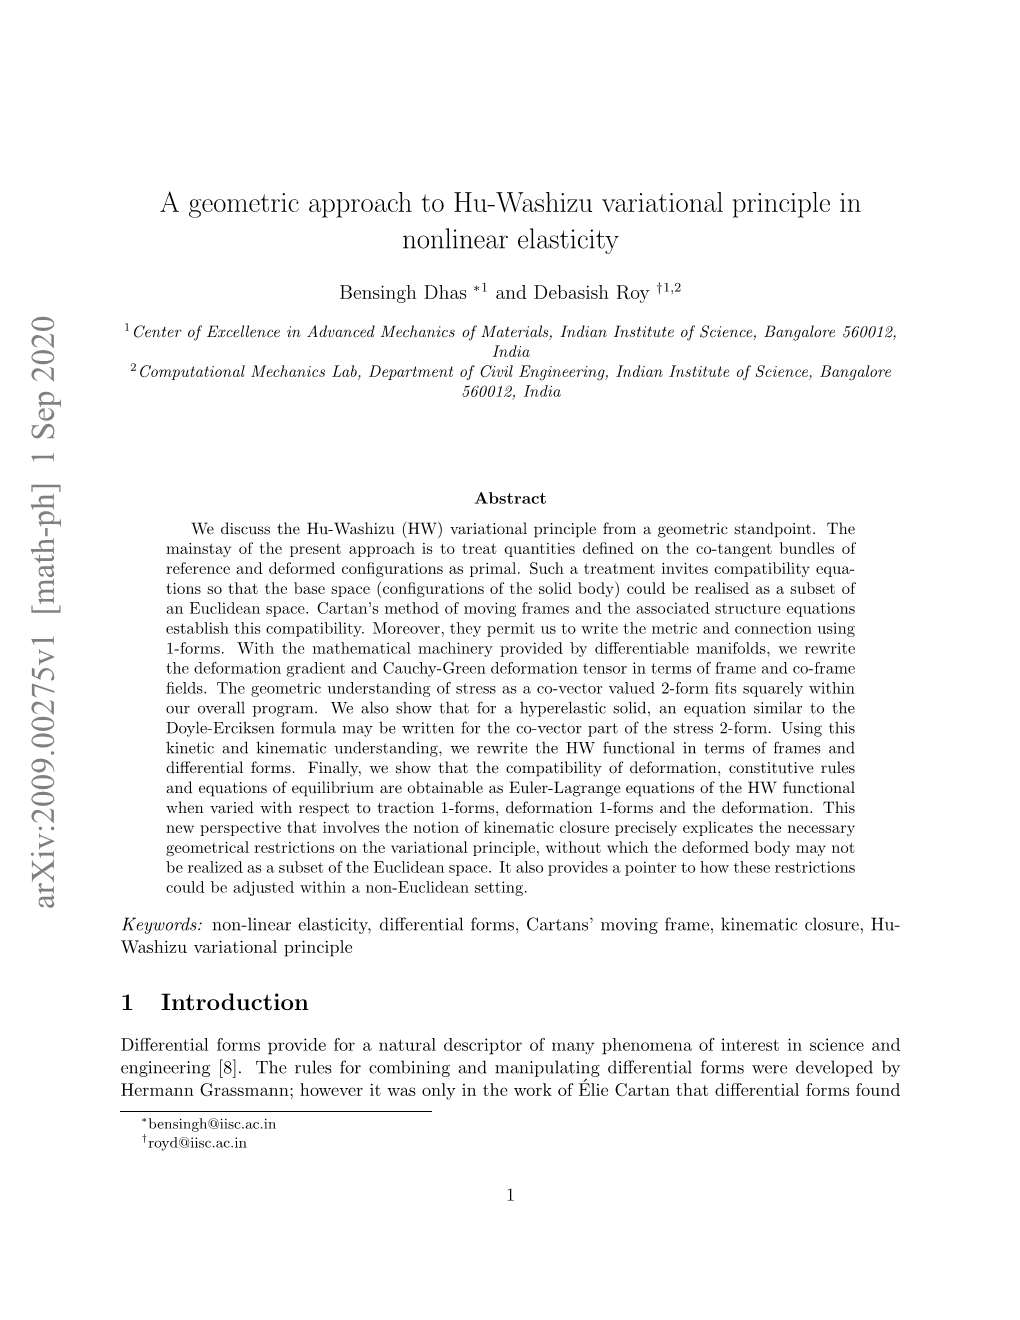 A Geometric Approach to Hu-Washizu Variational Principle in Nonlinear